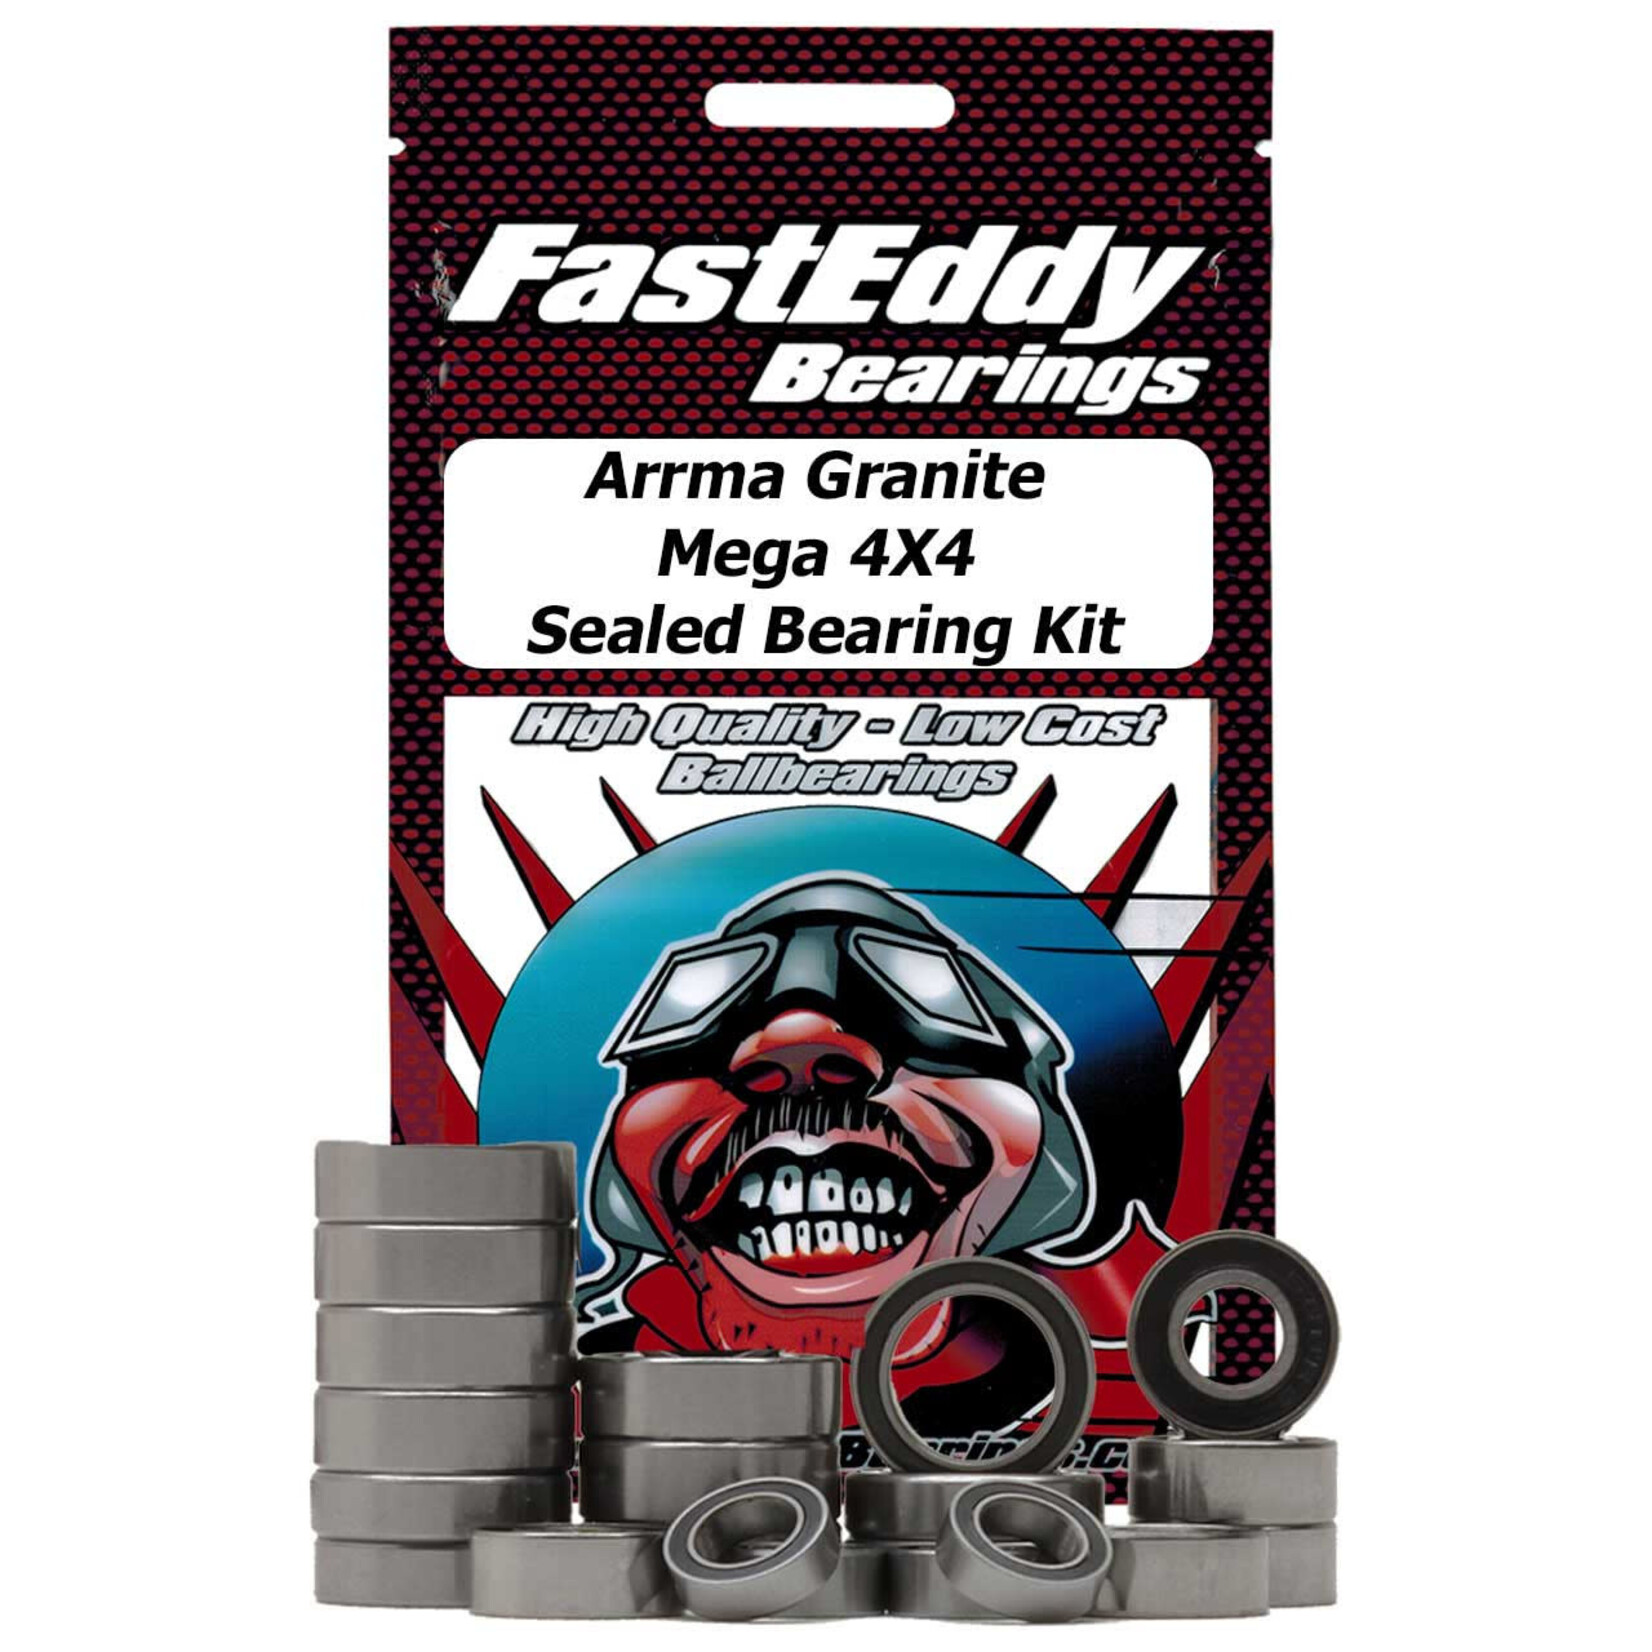 Fast Eddy Arrma Granite Mega 4x4 Bearing Kit